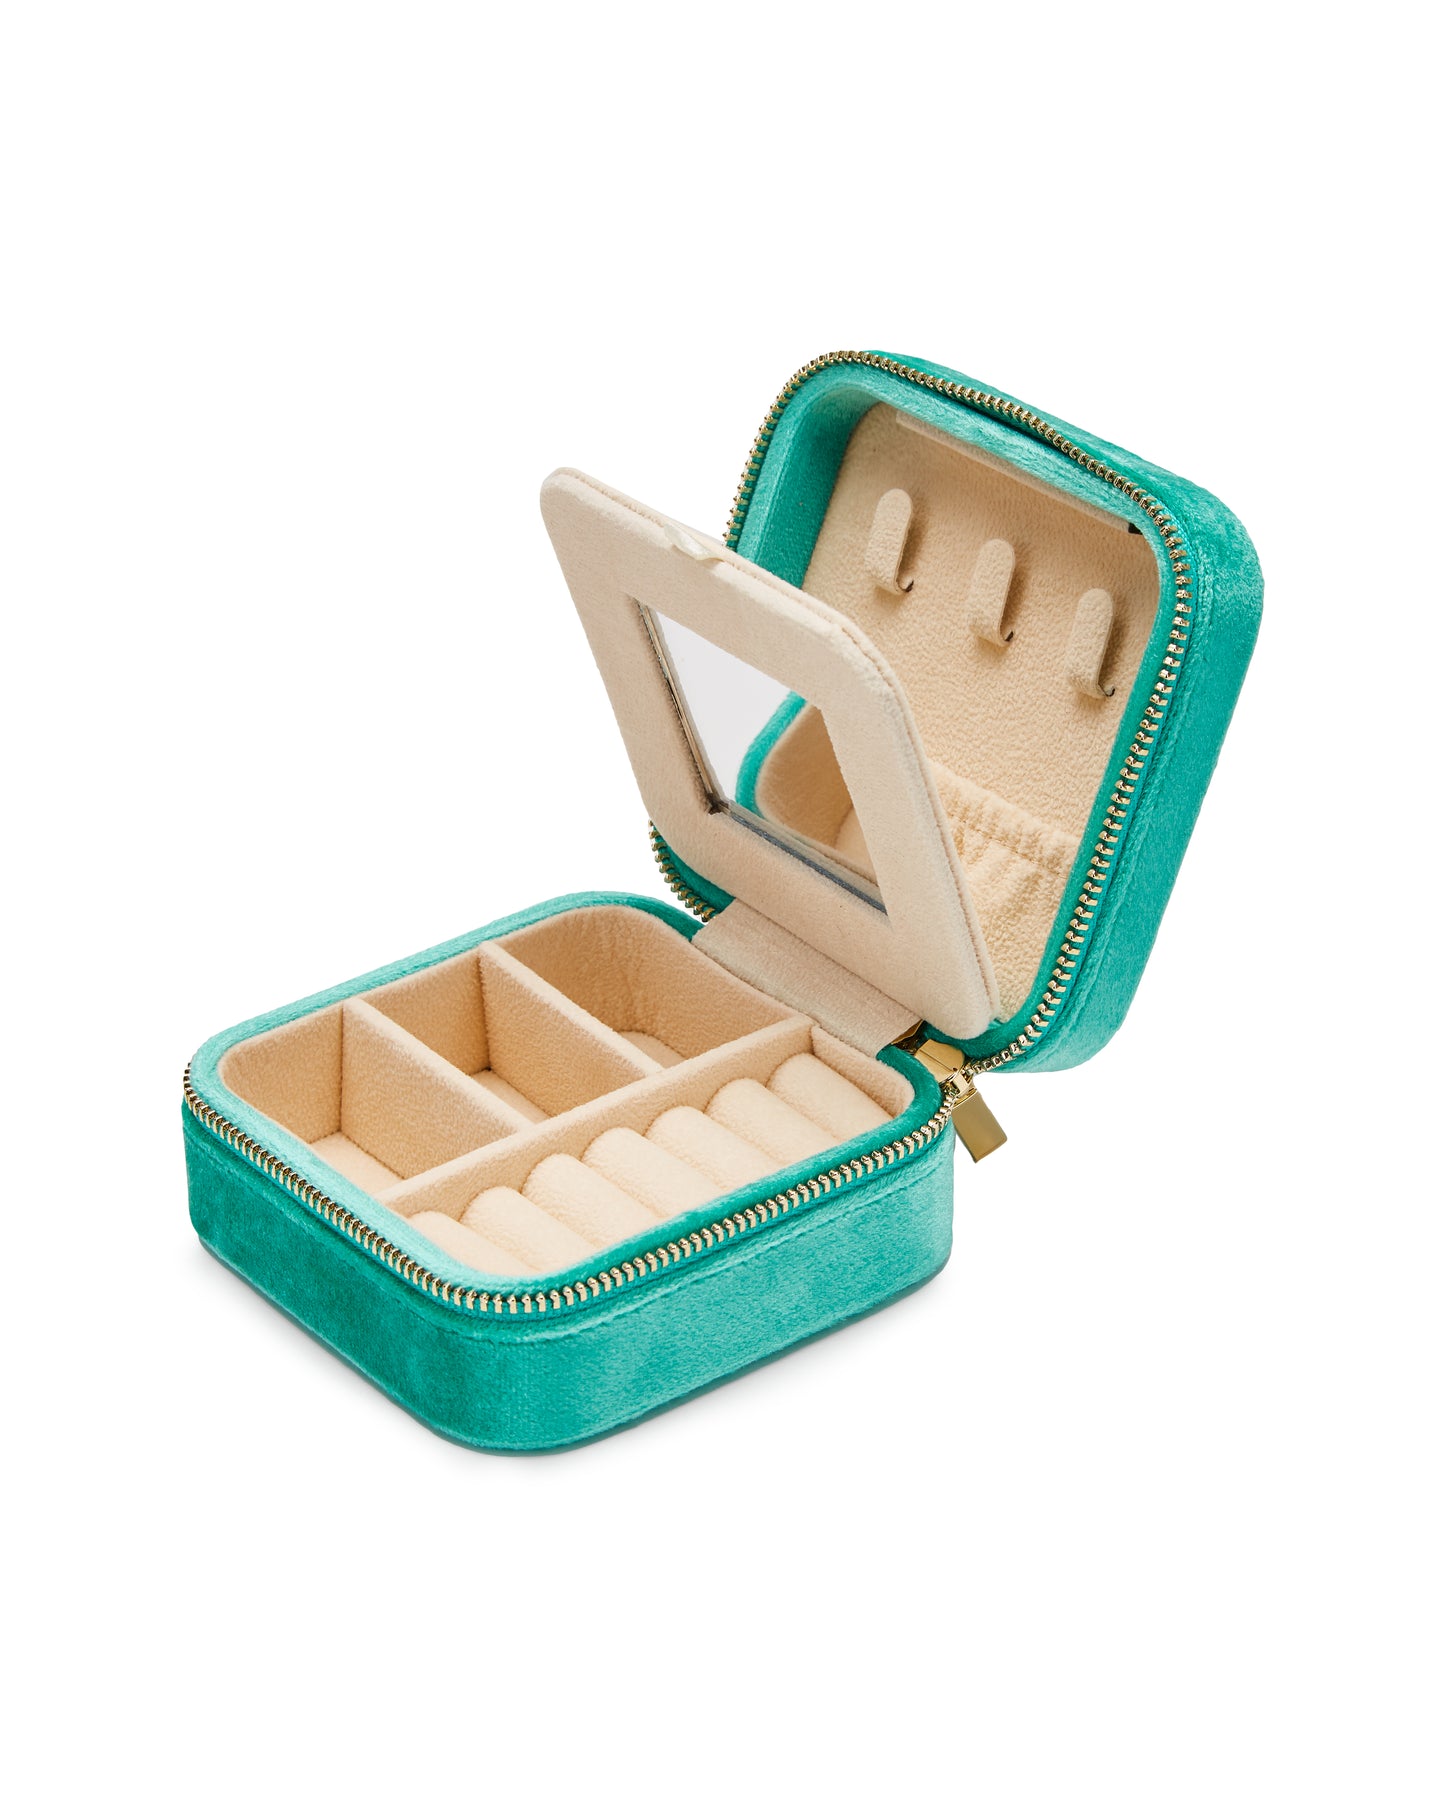 VELVET JEWELRY BOX col. metallic turquoise, directly orderable - 5 pieces